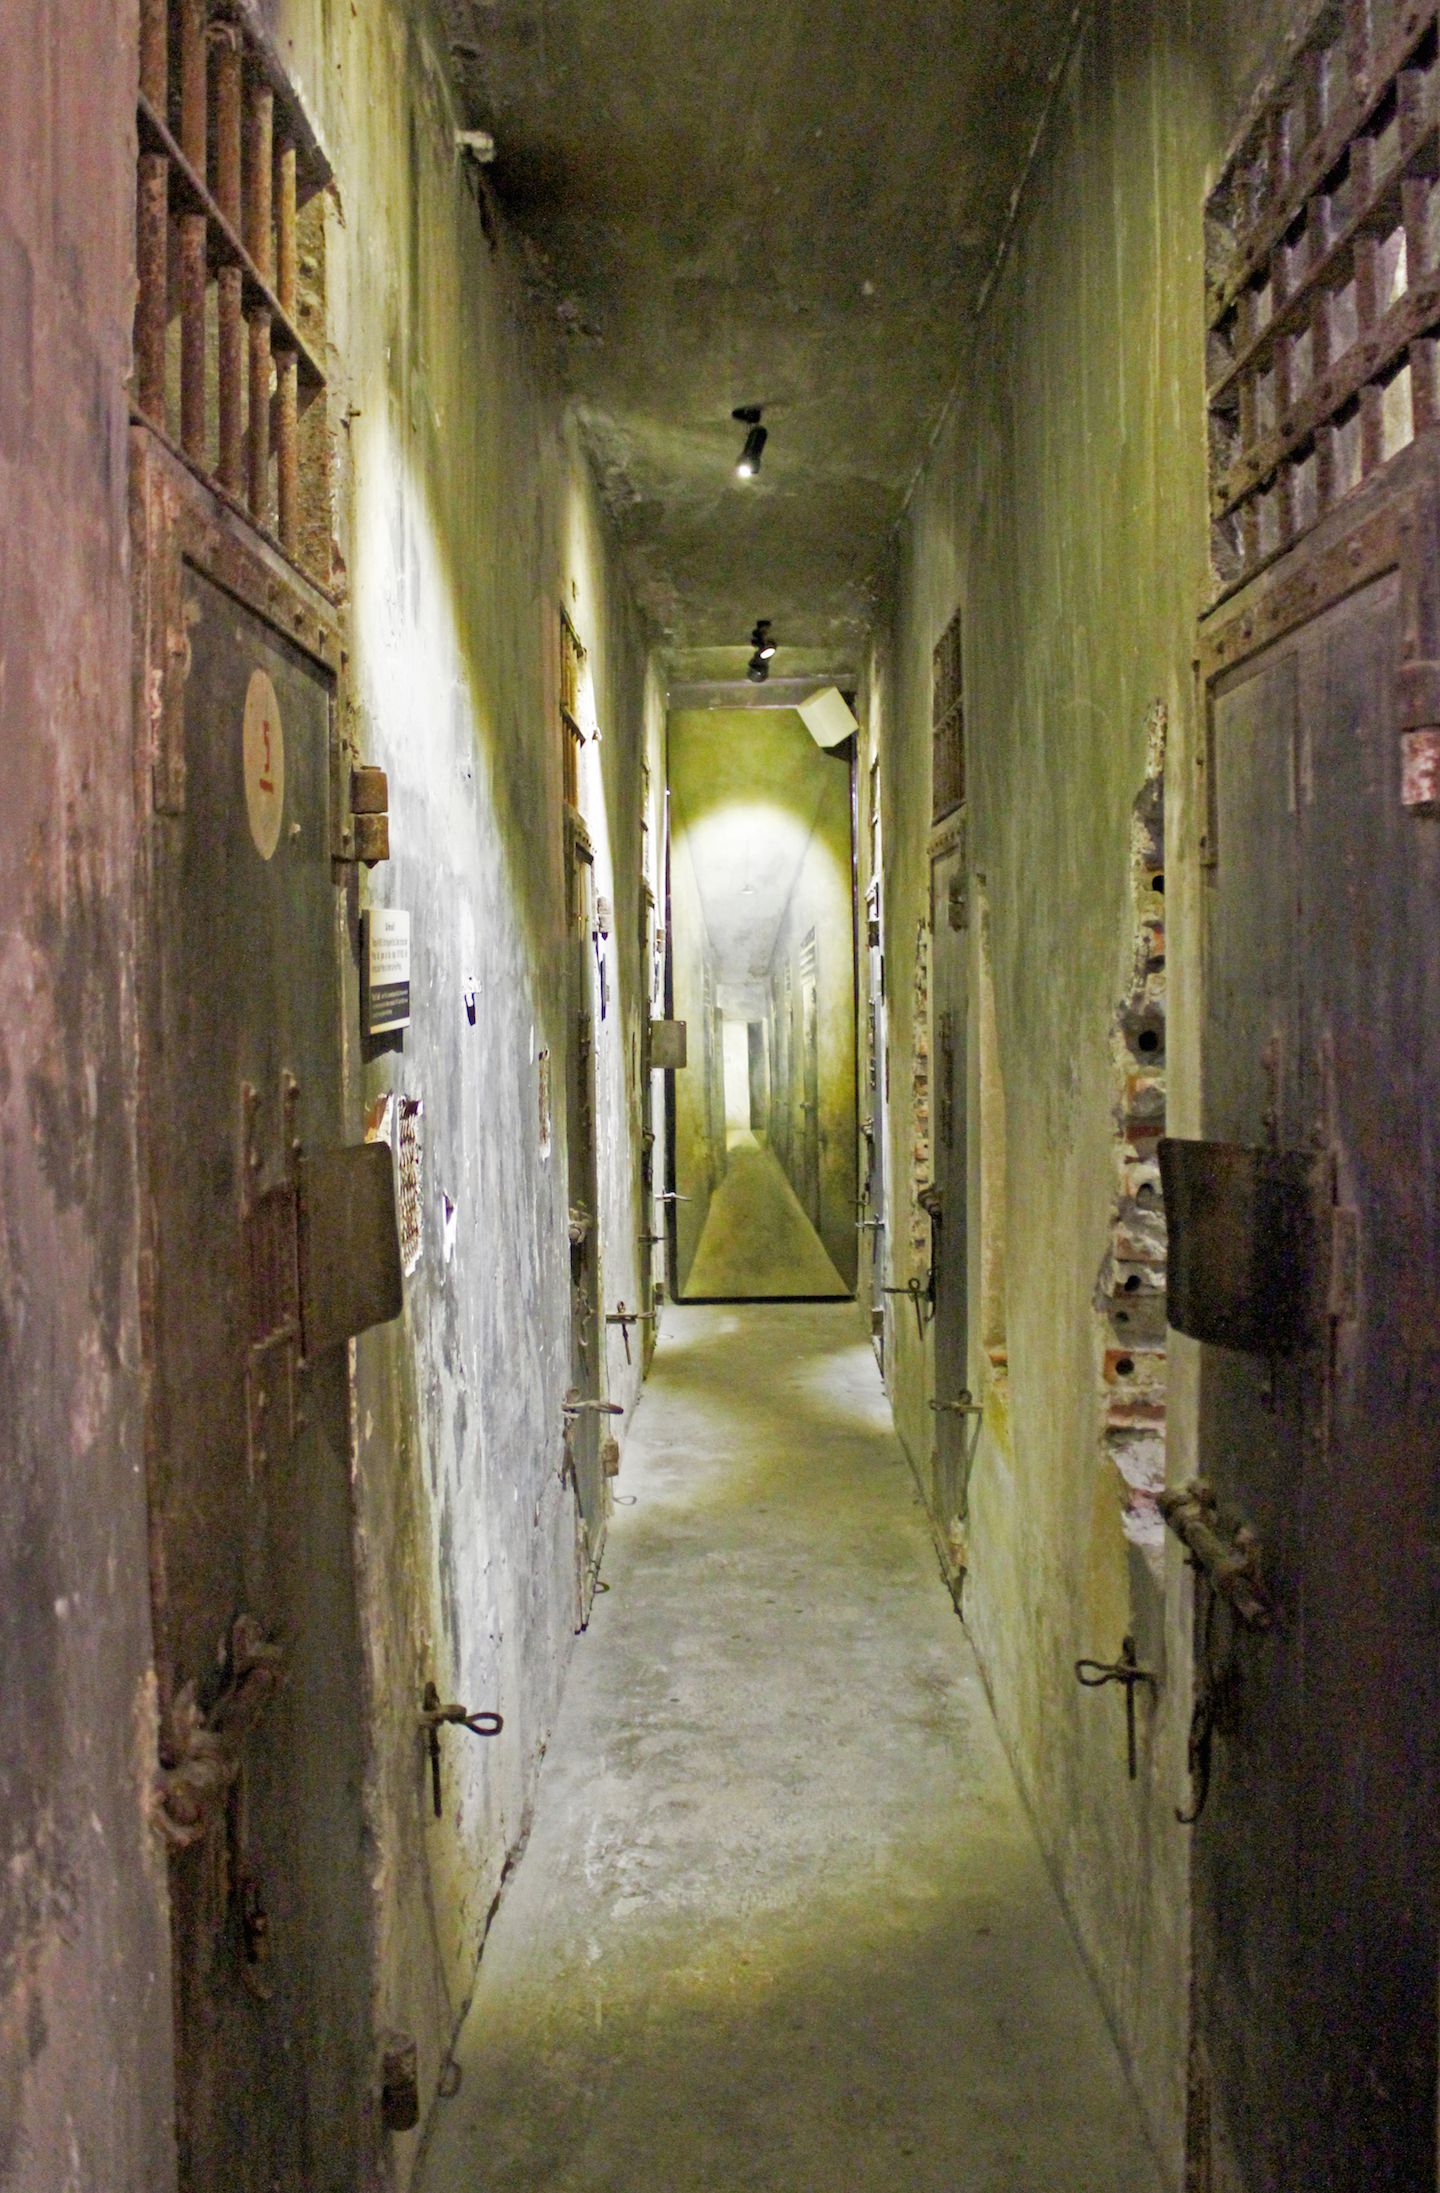 Corridor to the prisoners' cells